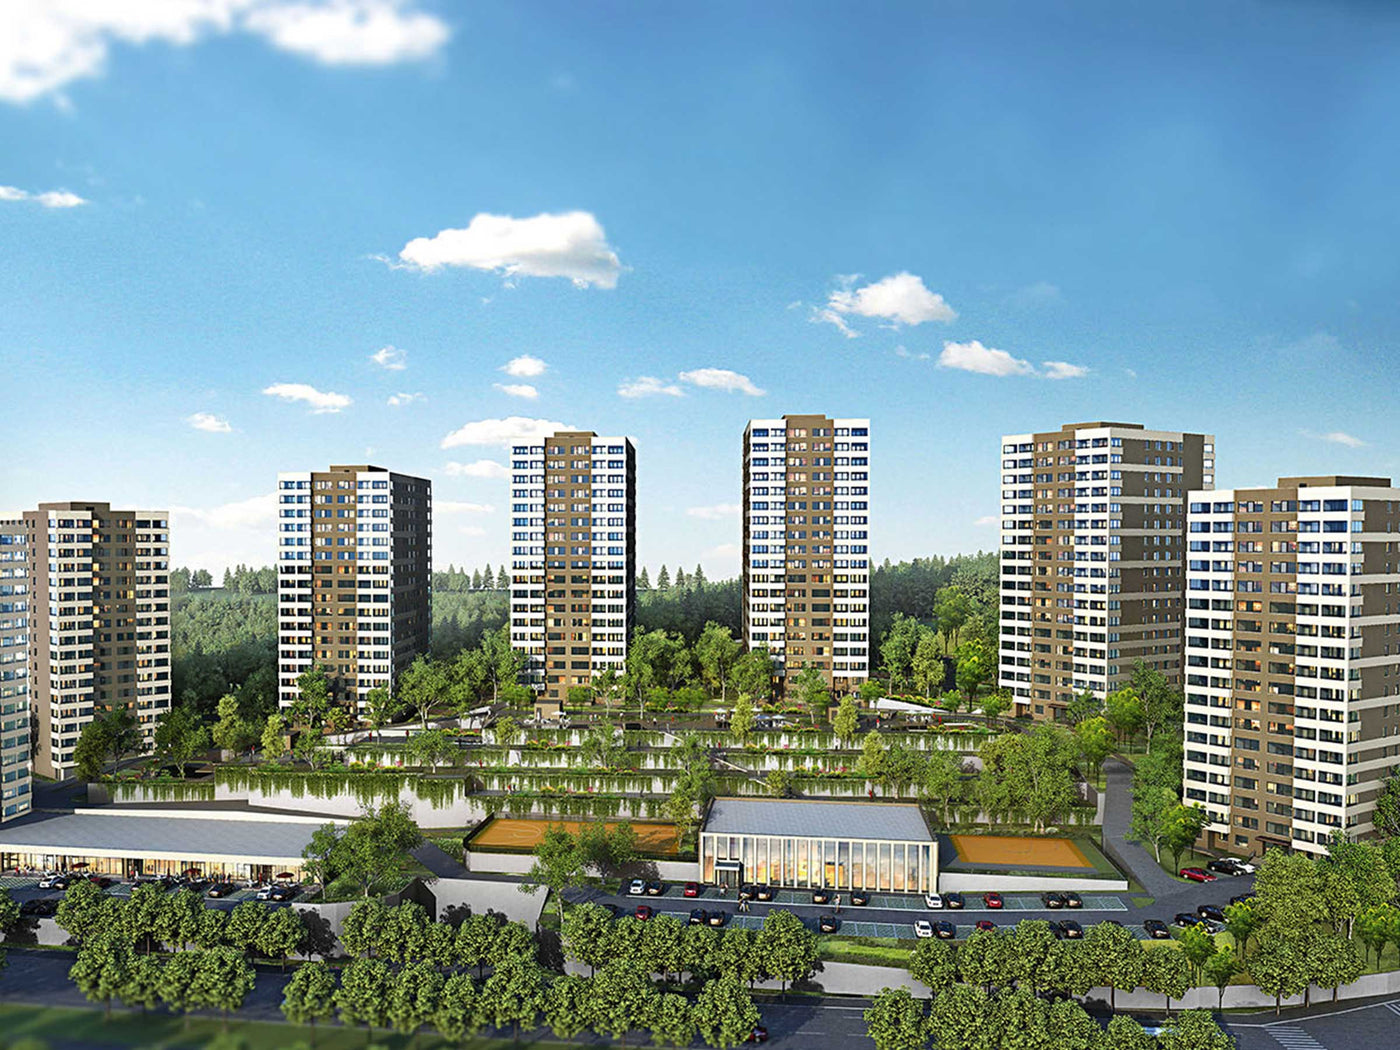 Sample Apartment of Kaşmir Yonca Estates is Designed with Lazzoni